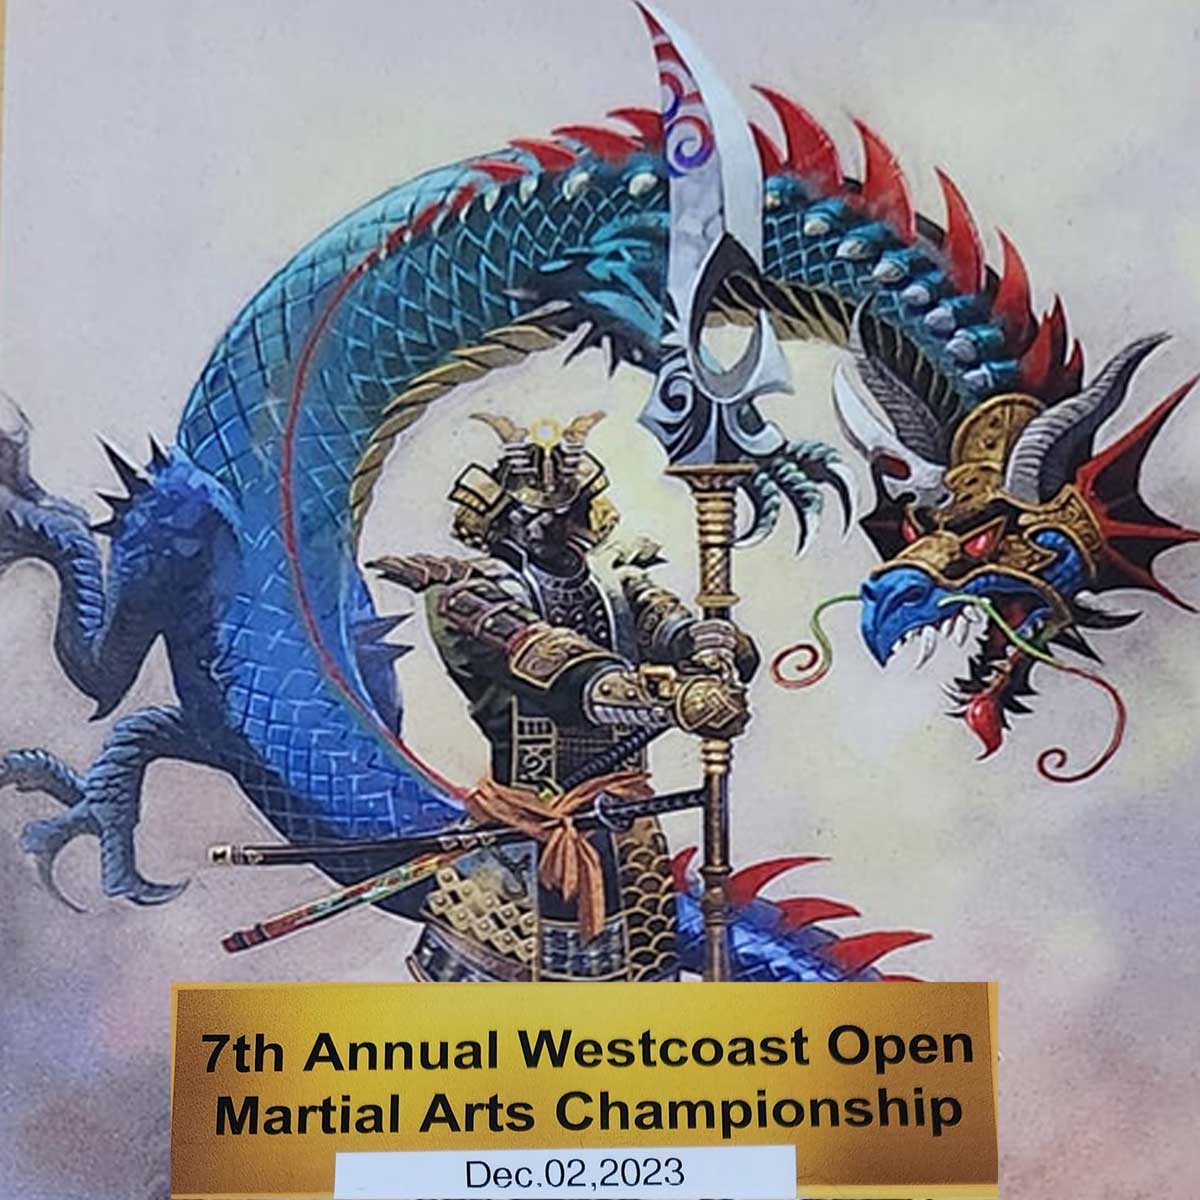 7th Annual Westcoast Open Martial Arts Championship, December 2, 2023, Sarasota, Florida